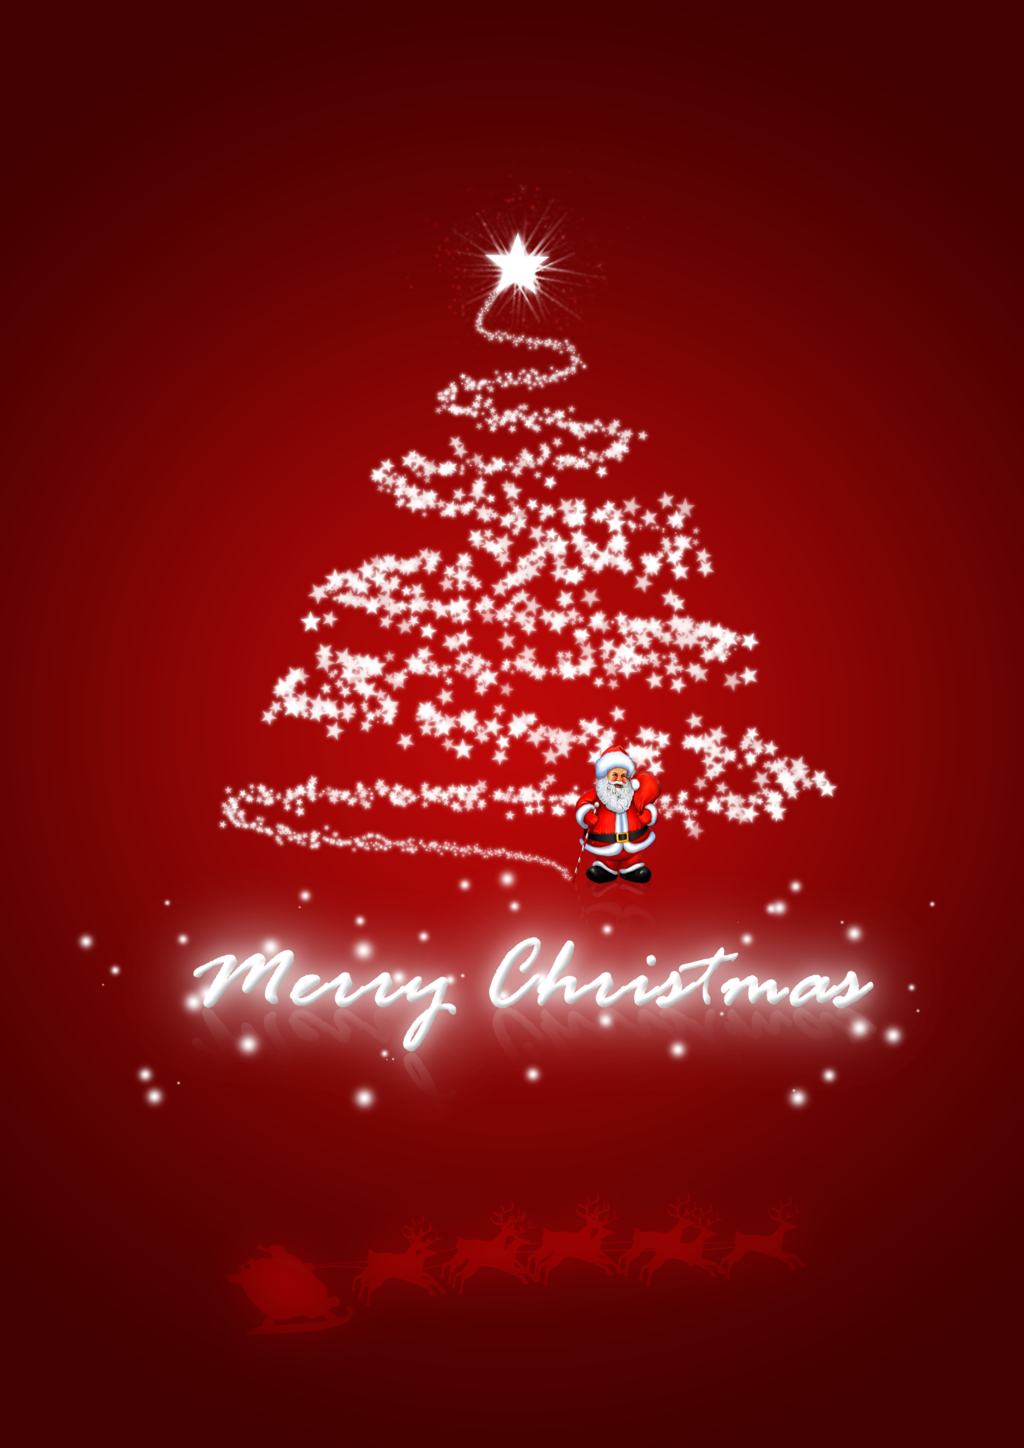 Merry Christmas!!!Everyone